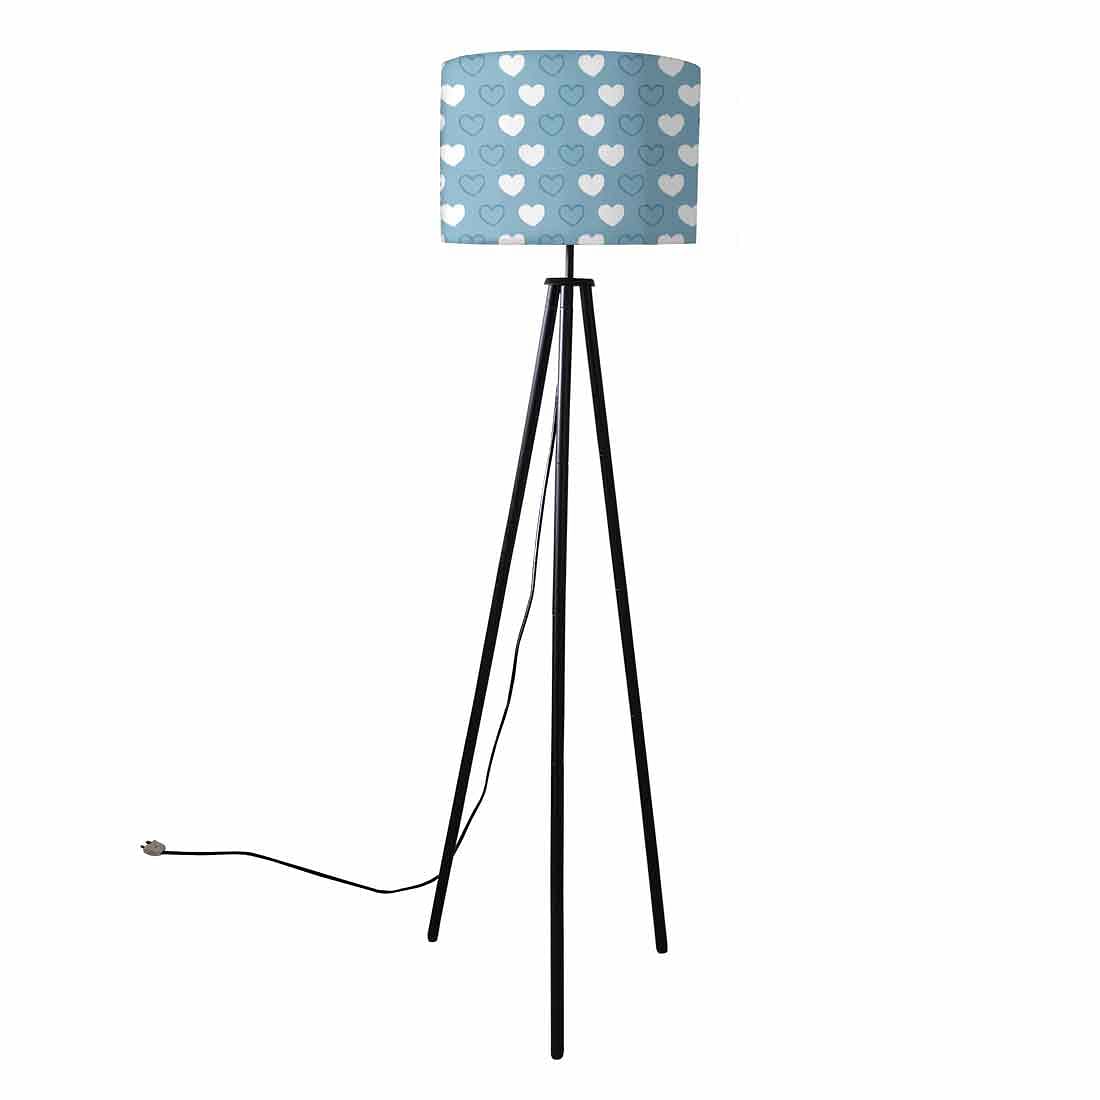 Tripod Floor Lamp Standing Light for Living Rooms -Blue Hearts Nutcase